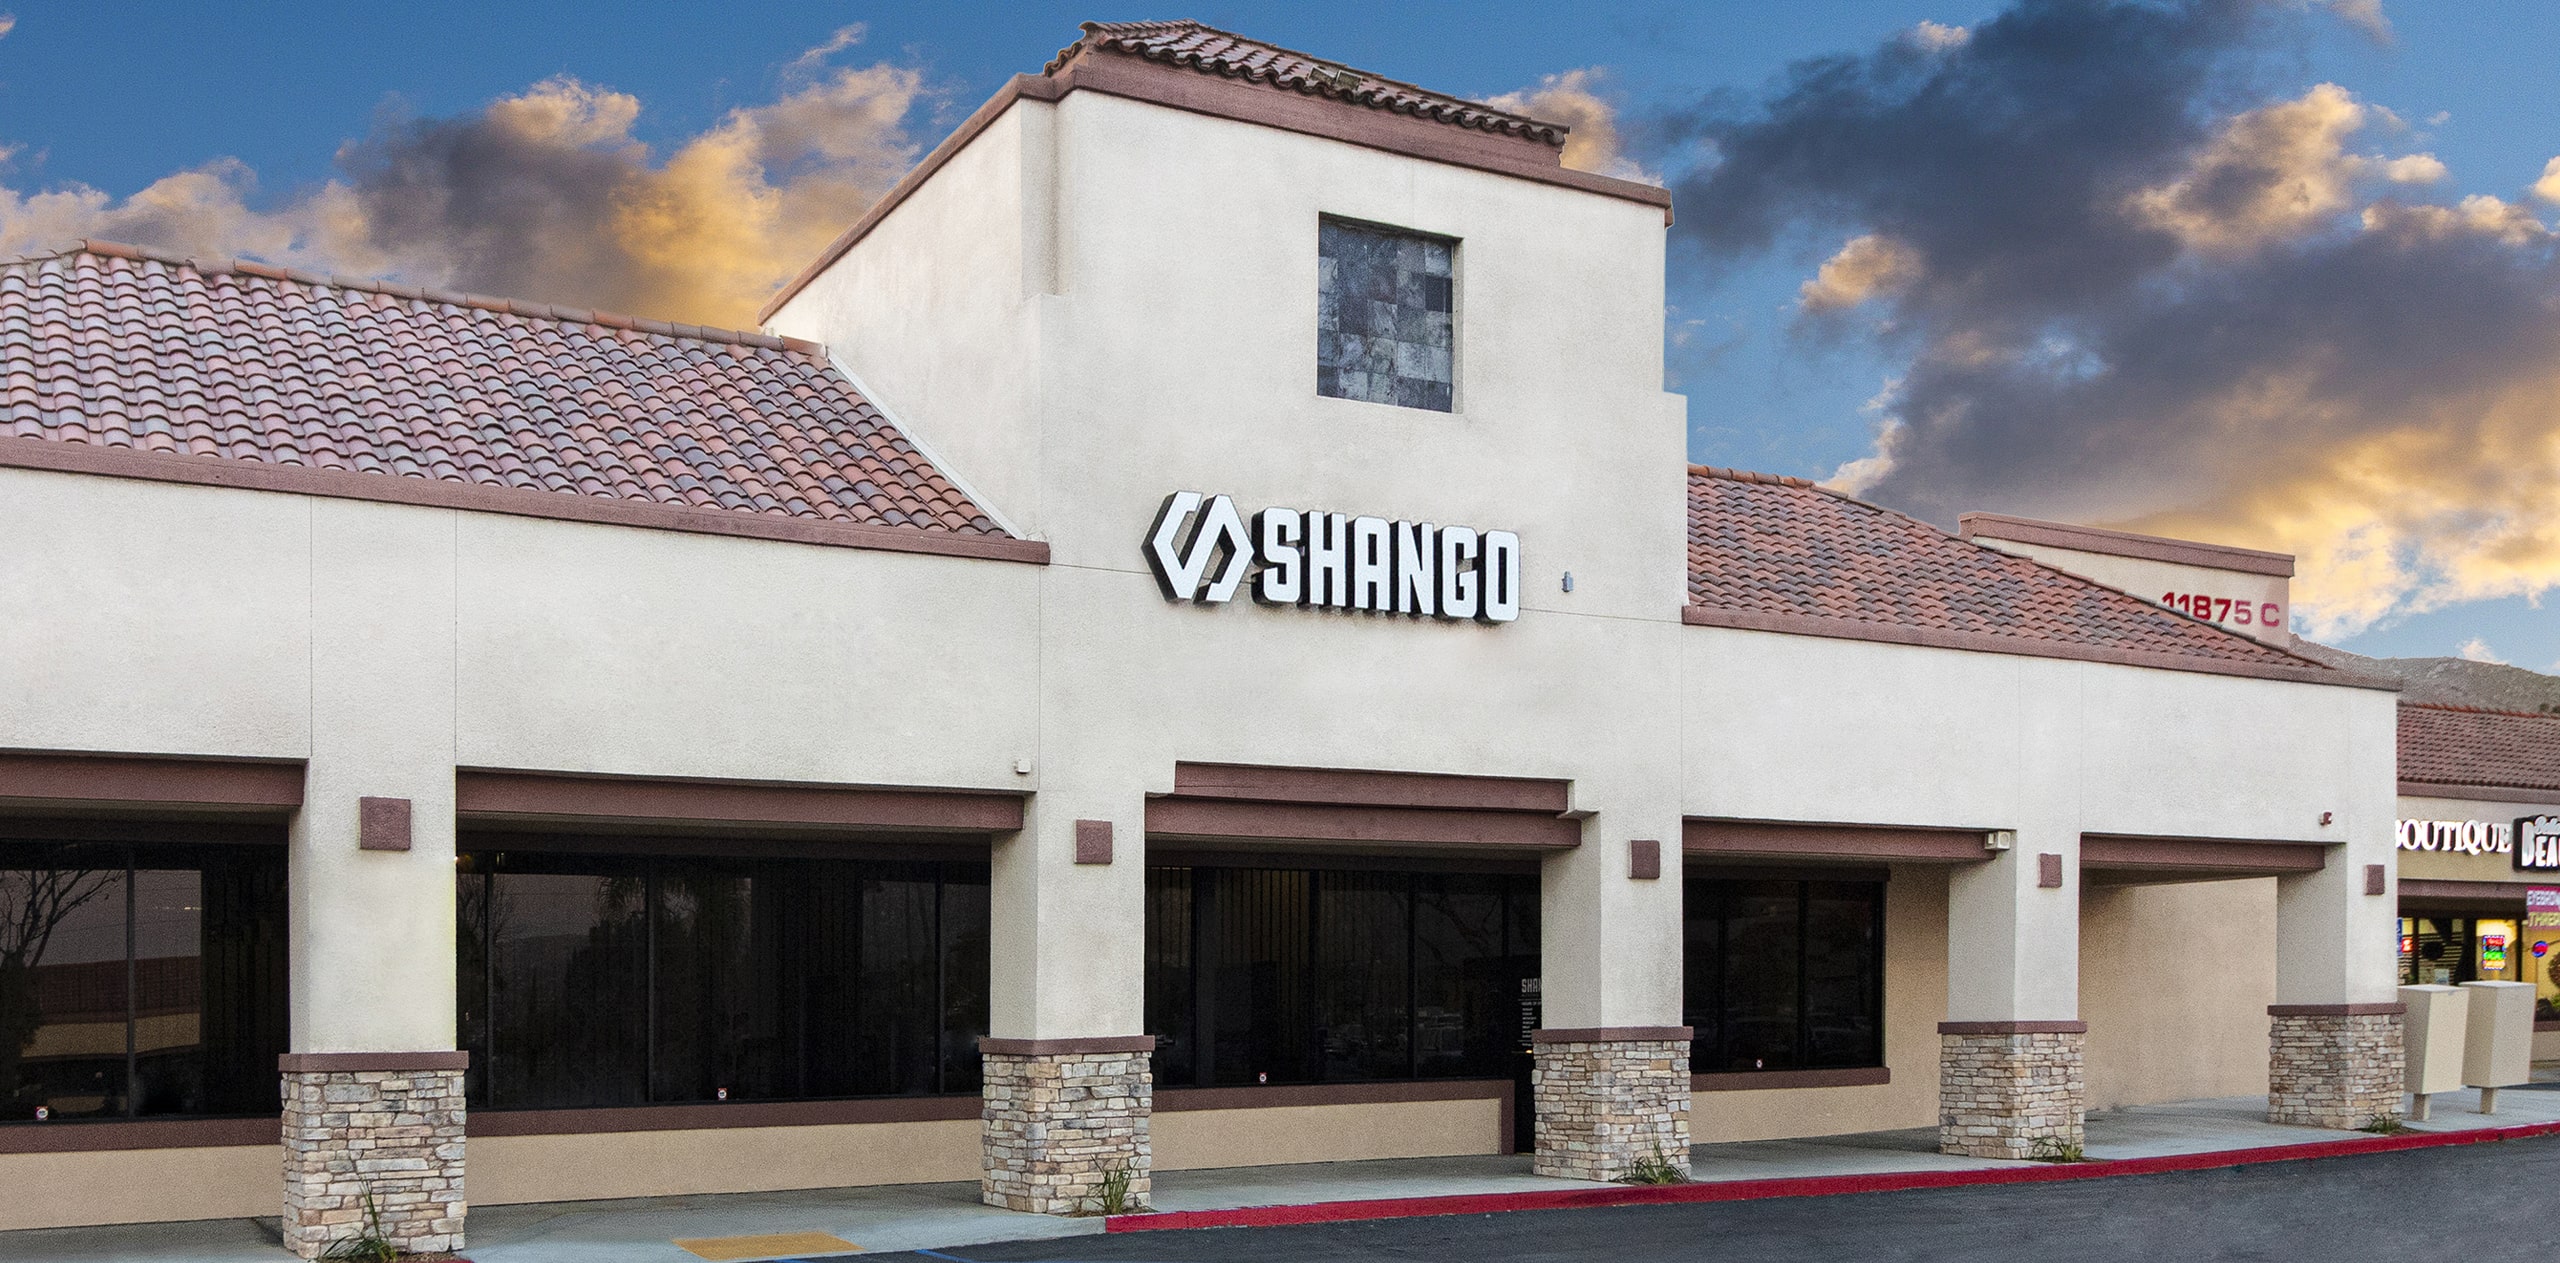 https://goshango.com/locations/california-dispensaries/shango-moreno-valley/